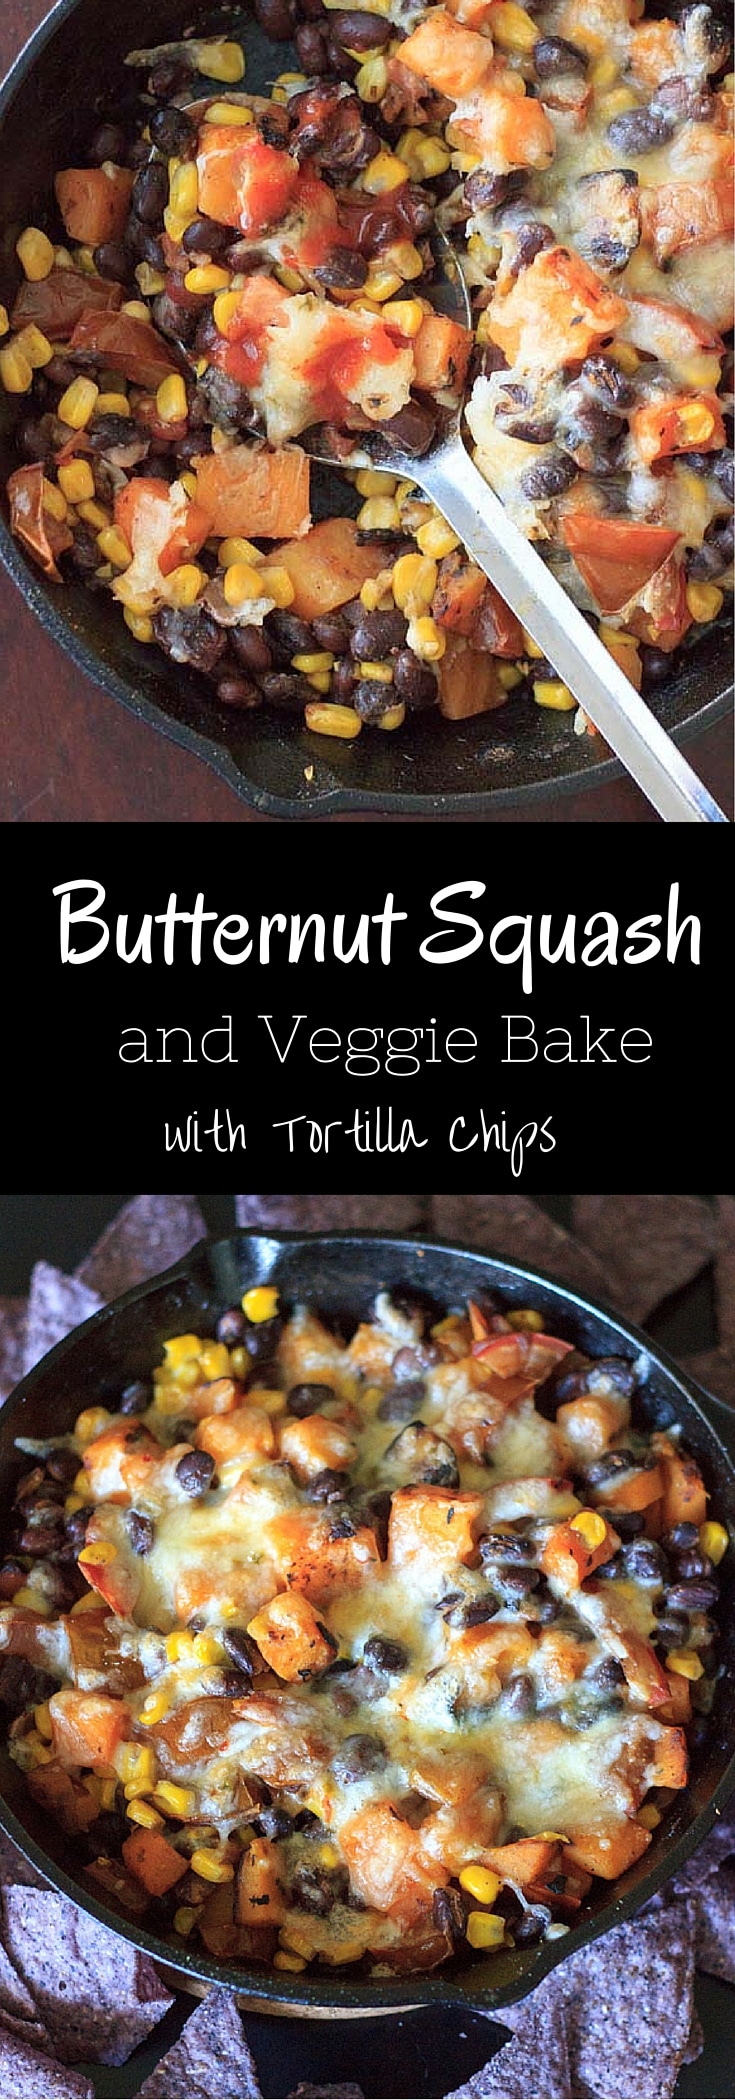 Butternut Squash and Veggie Bake - one-pan vegetable dish